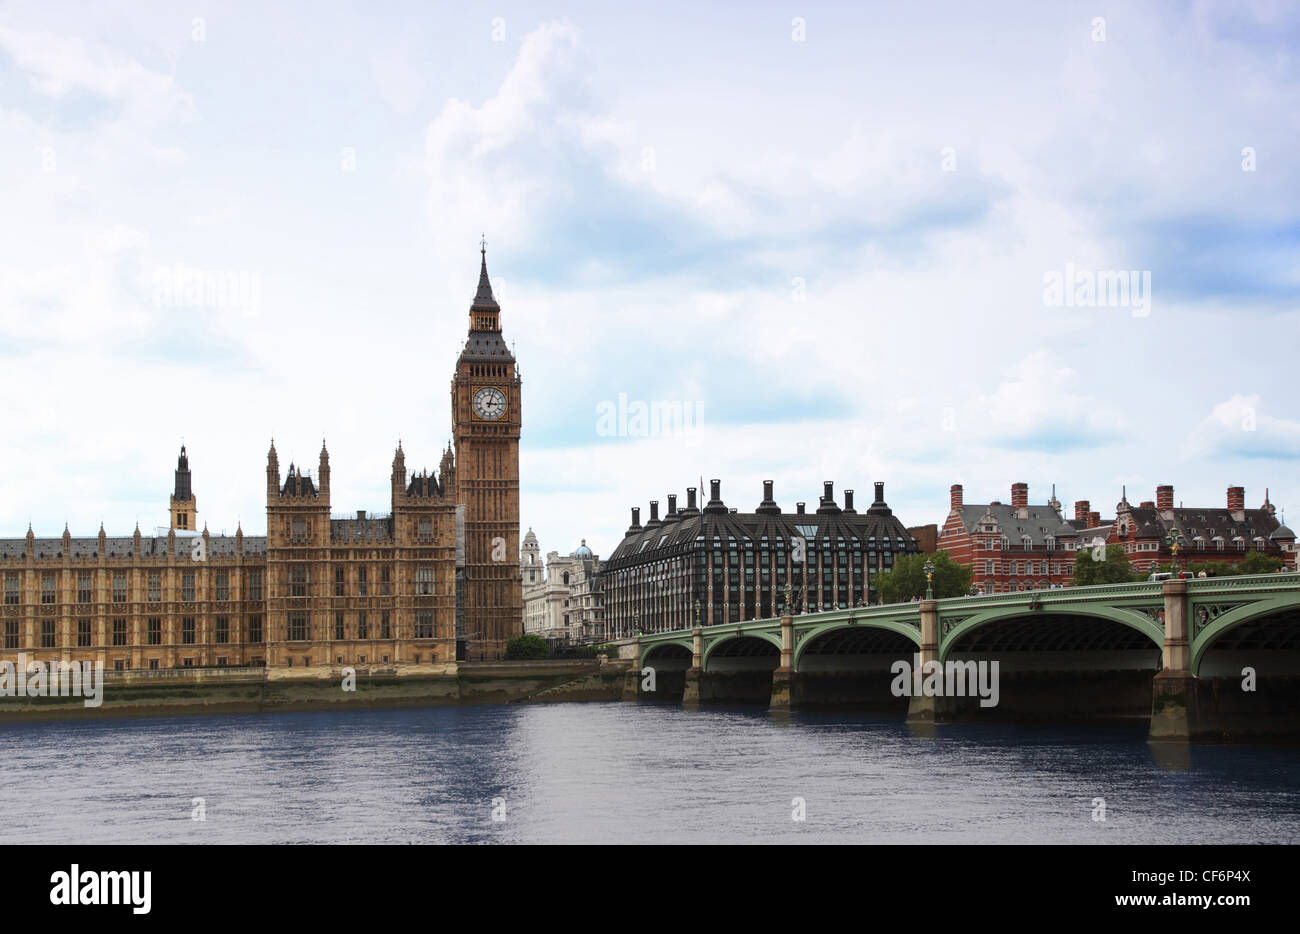 Westminster Bridge with Big Ben clock tower in London. Big Ben is one of London's best-known landmarks. Stock Photo